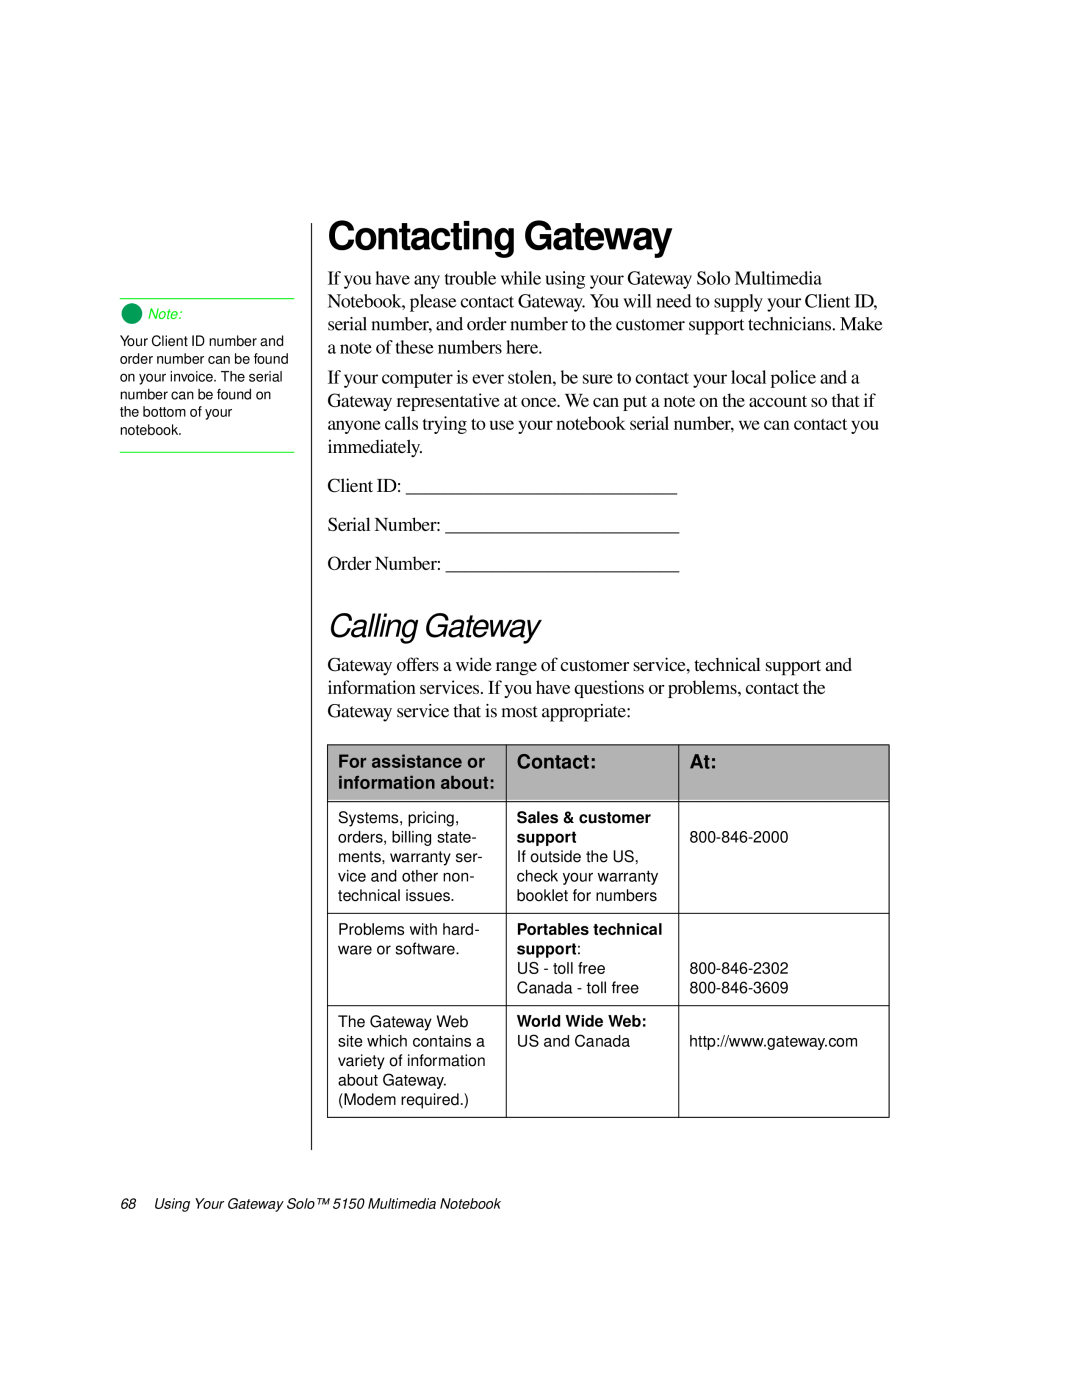 Gateway TM 5150 manual Contacting Gateway, Calling Gateway 